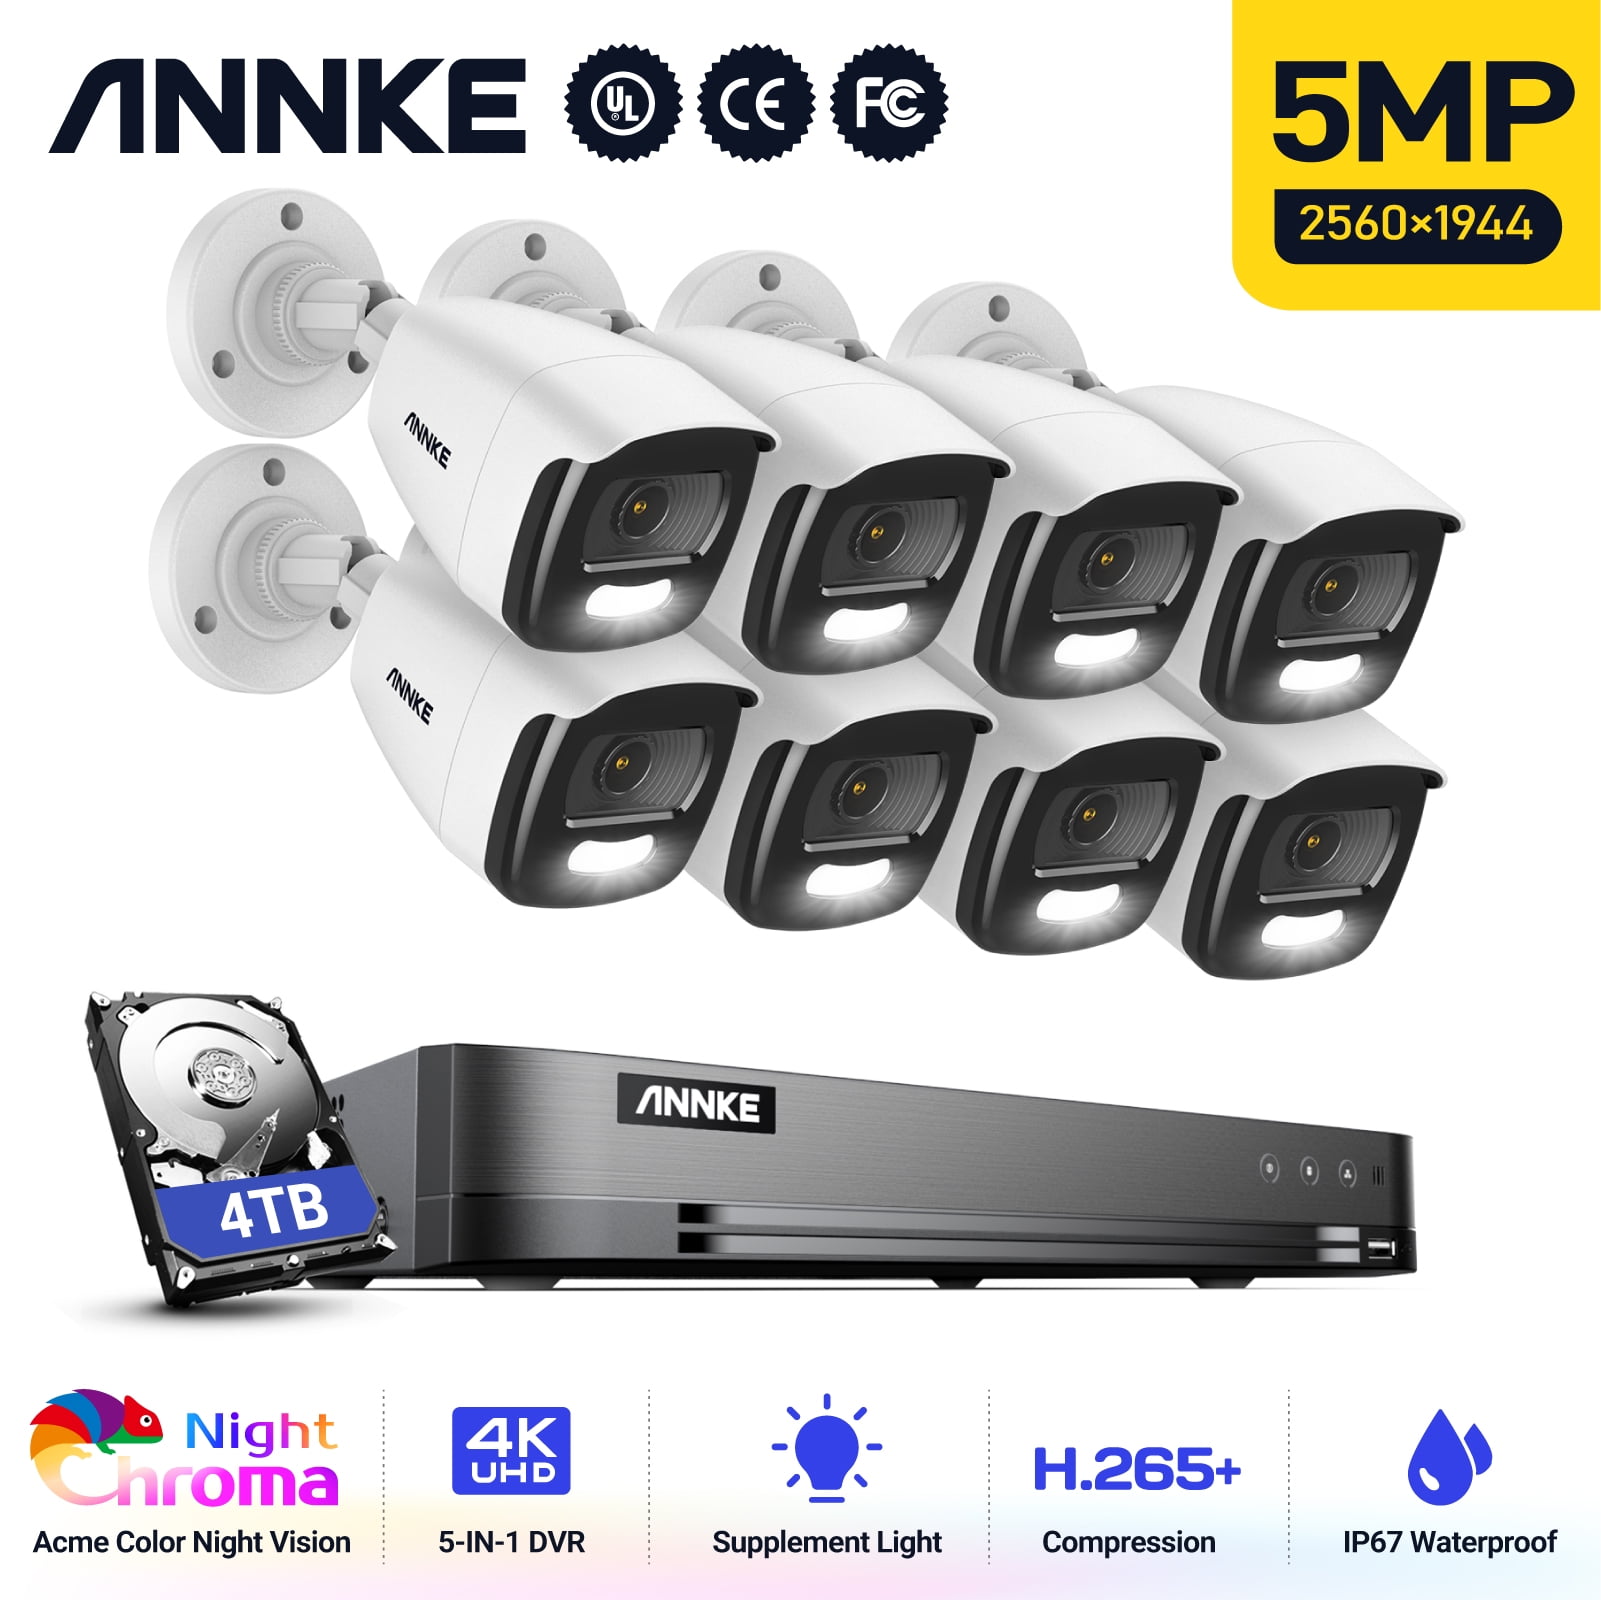 ANNKE 8MP ANNKE CCTV System AI Human Detection Camera 16CH DVR Color Night Vision IP67 